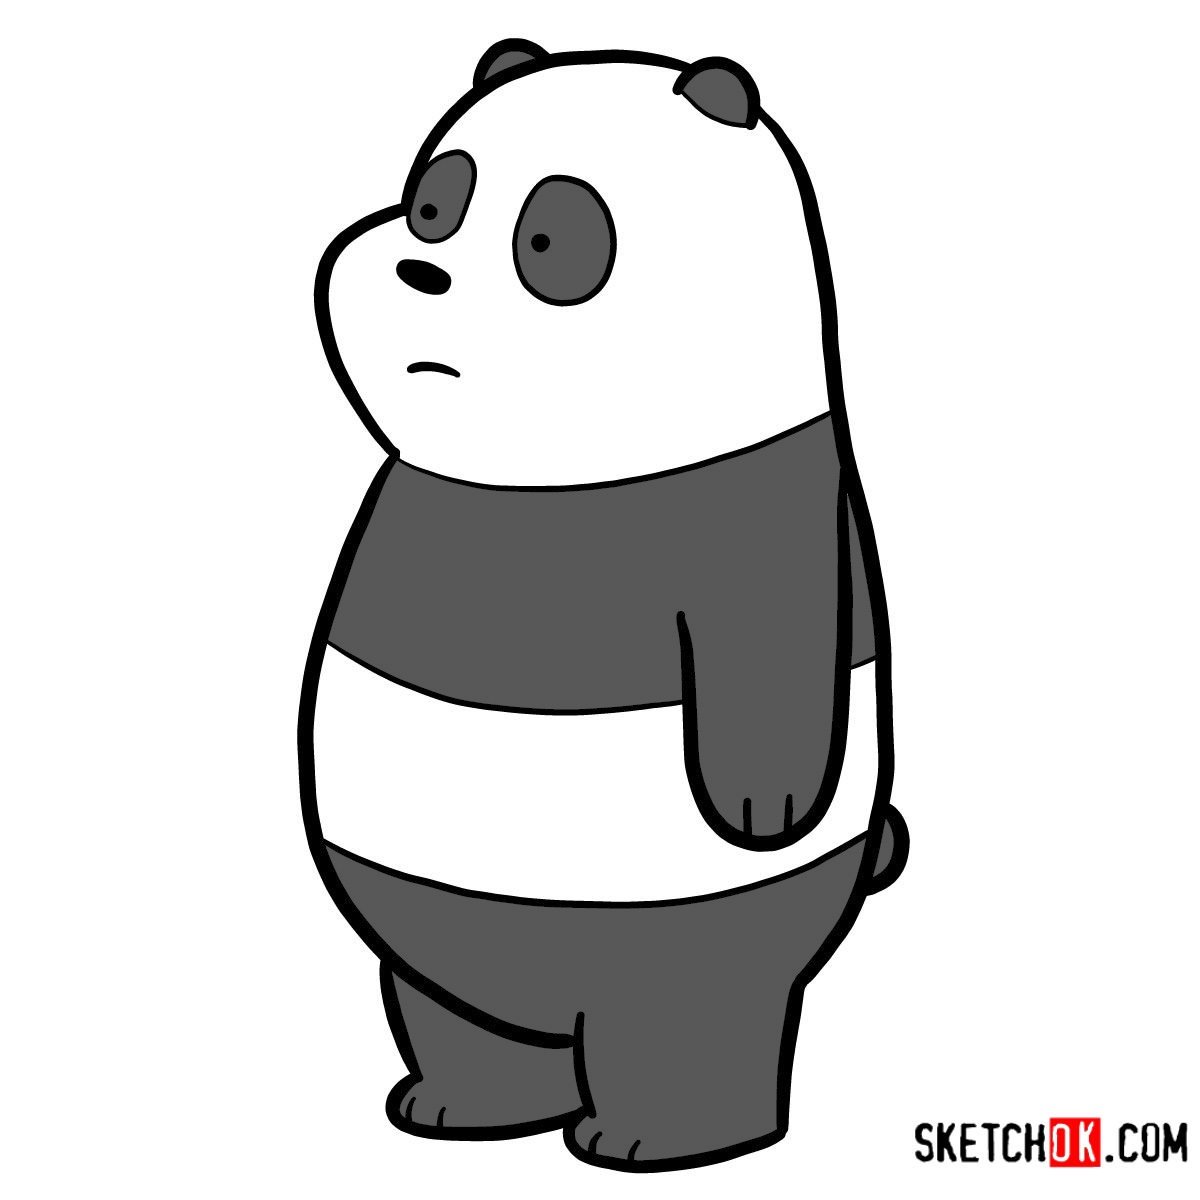 How to draw Panda Bear | We Bare Bears